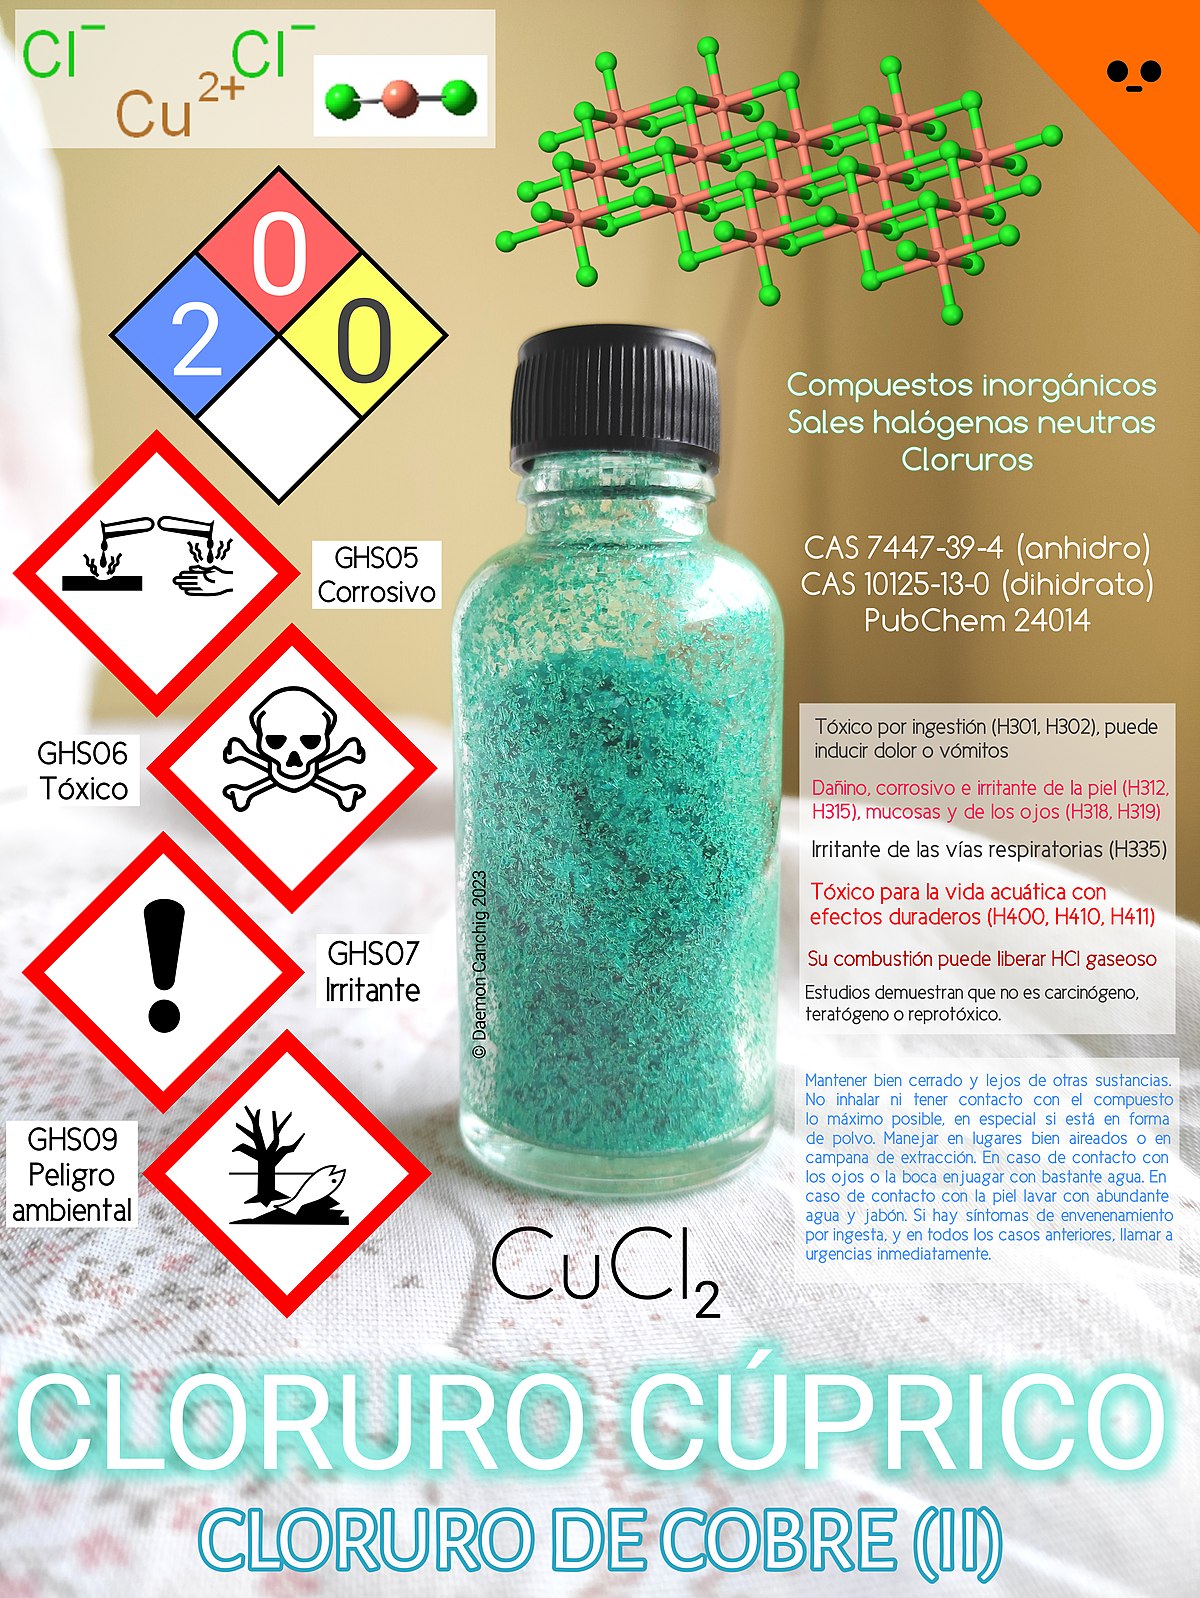 Sulfato de cobre(II) pentahidratado - Wikipedia, la enciclopedia libre